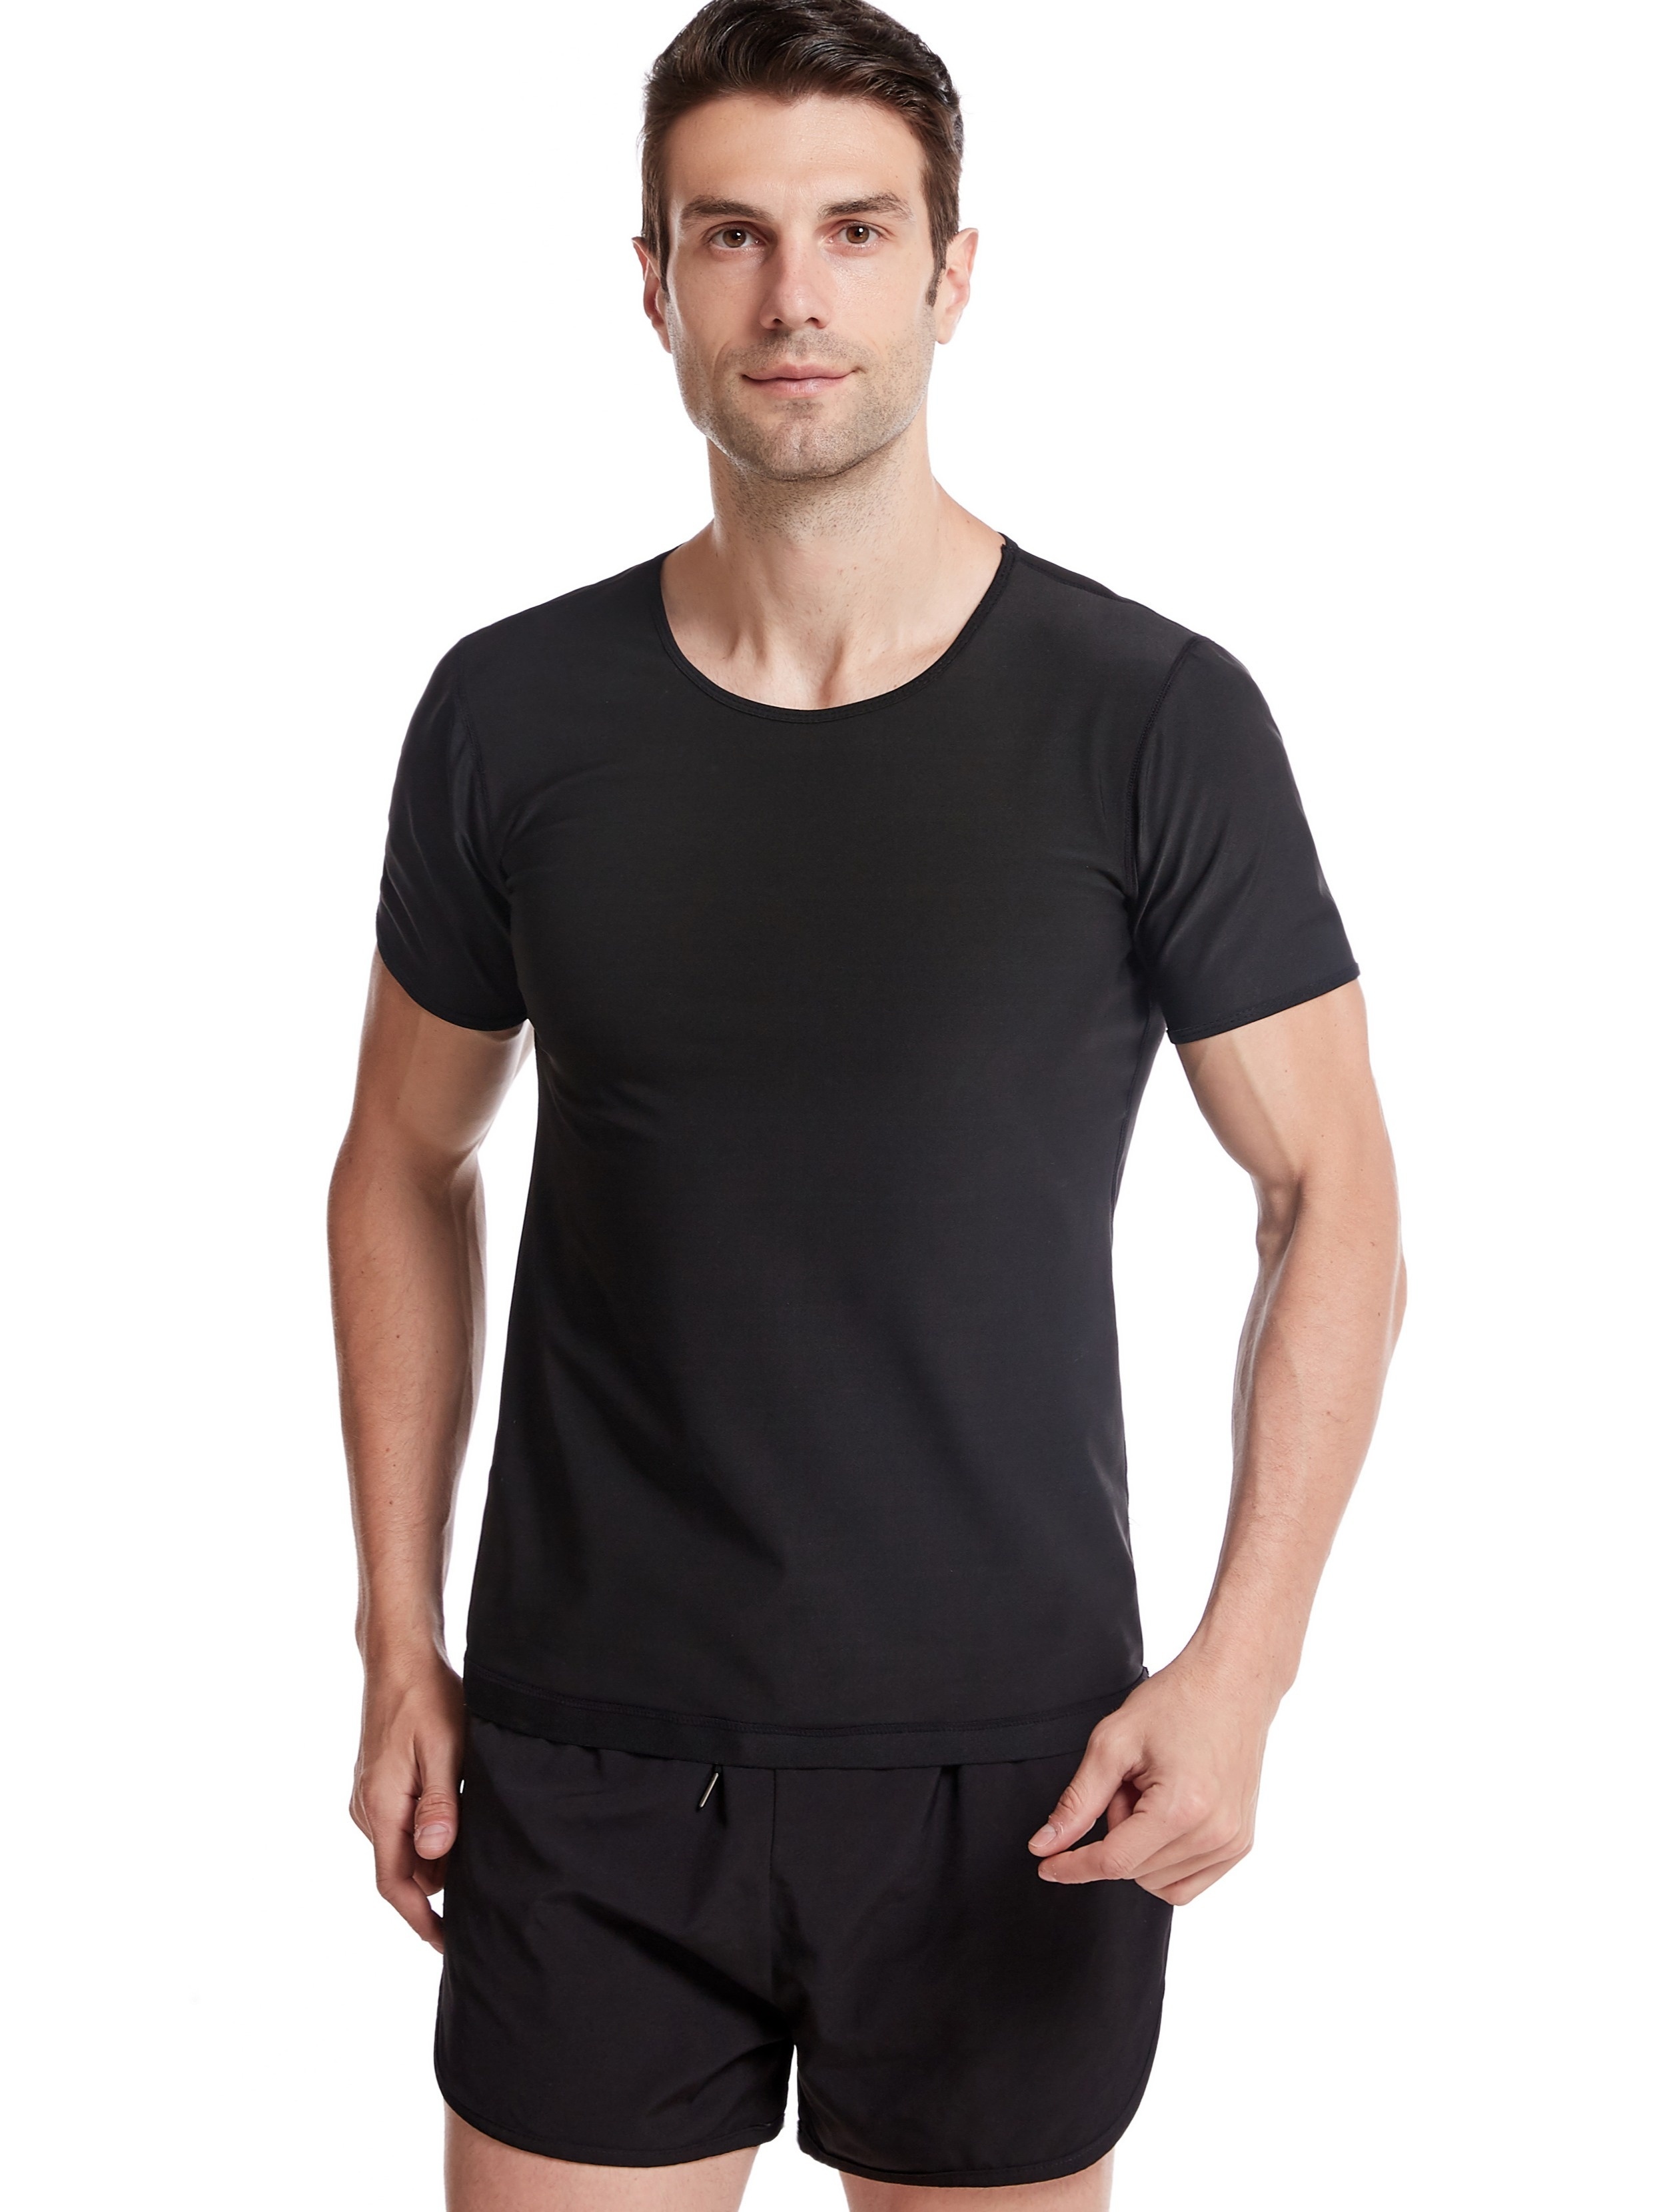 Kewlioo Men's Heat Trapping Zipper Sweat Enhancing Vest (Black, L